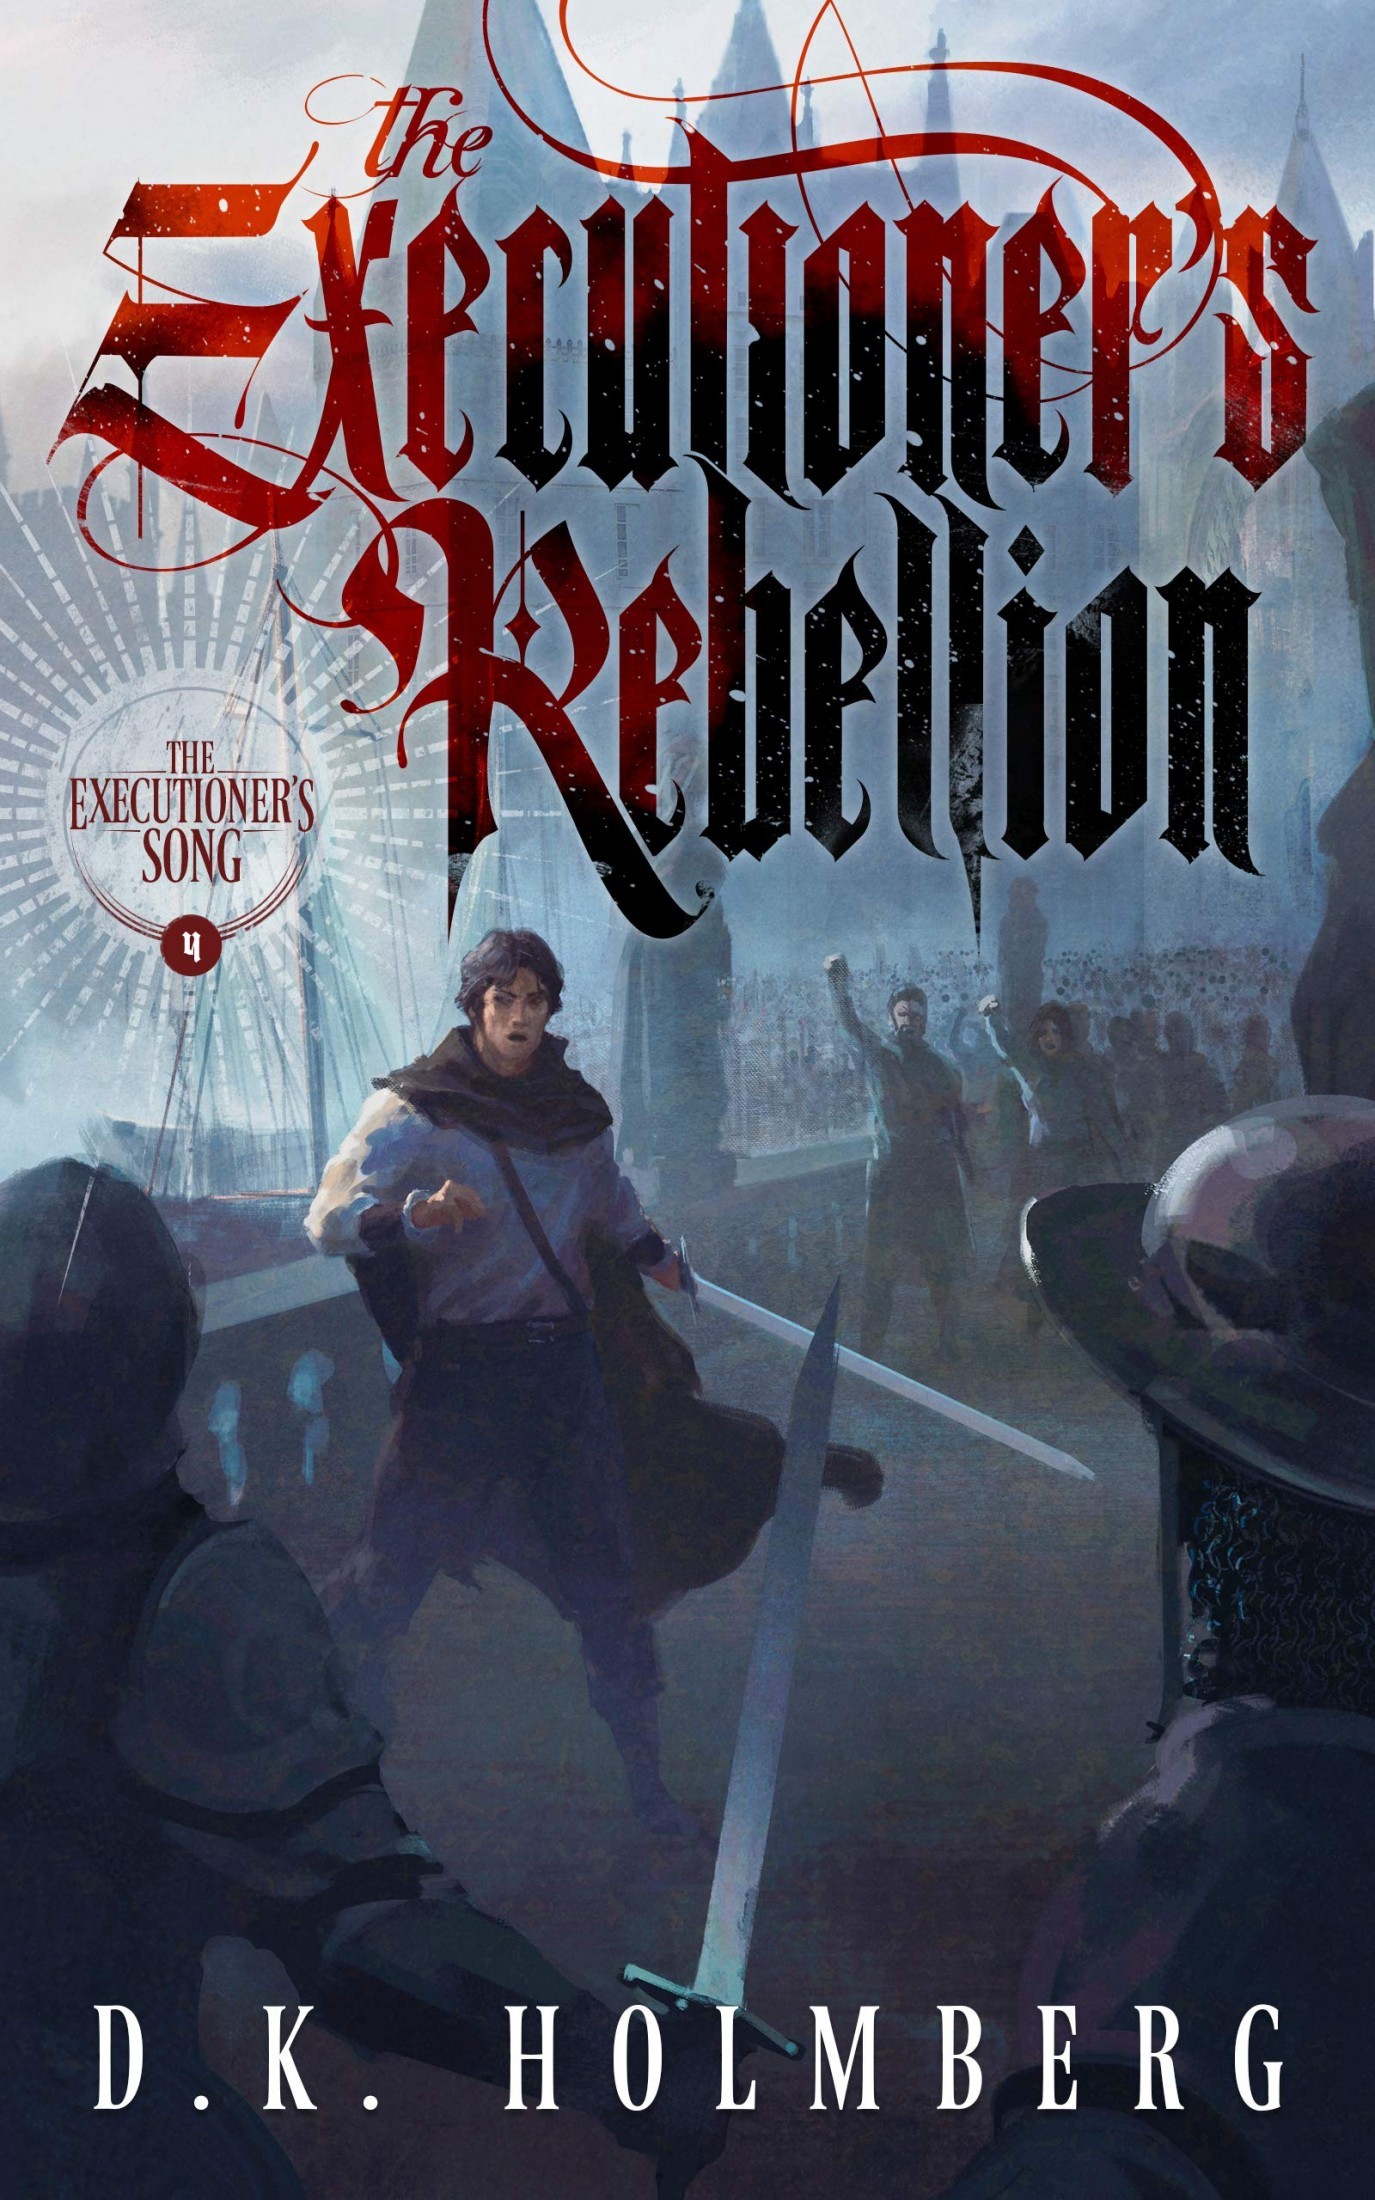 The Executioner's Rebellion